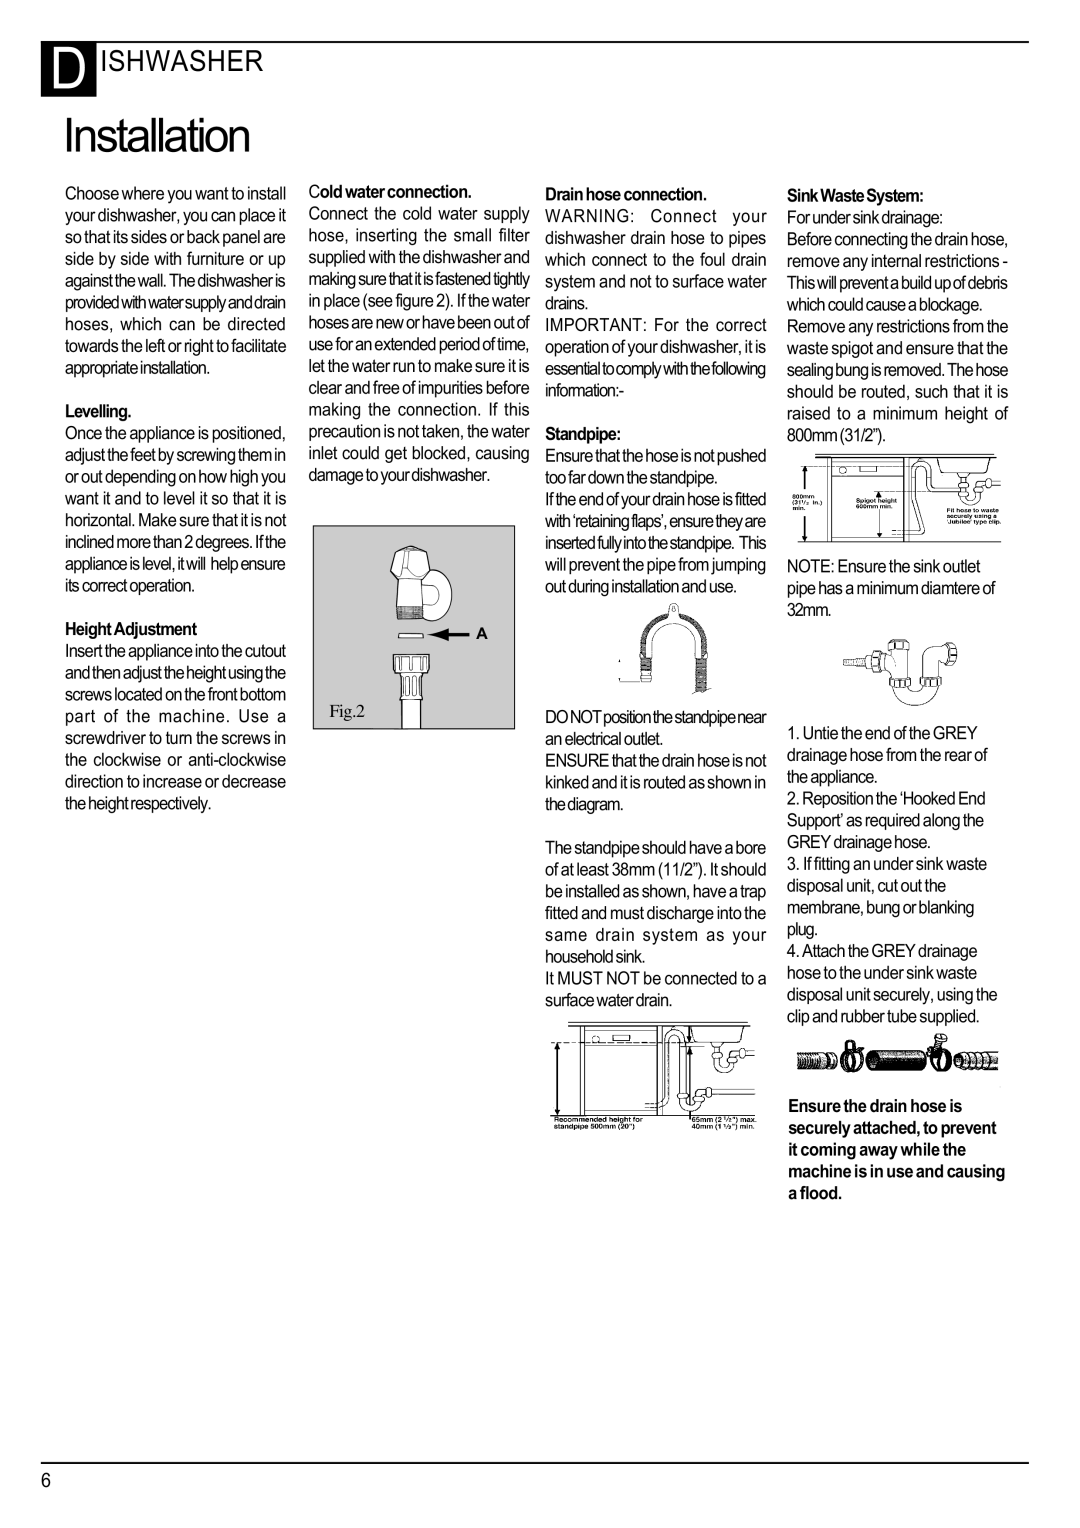 Hotpoint Instructions manual Installation, D Ishwasher, Levelling, Drainhoseconnection, Standpipe, SinkWasteSystem 